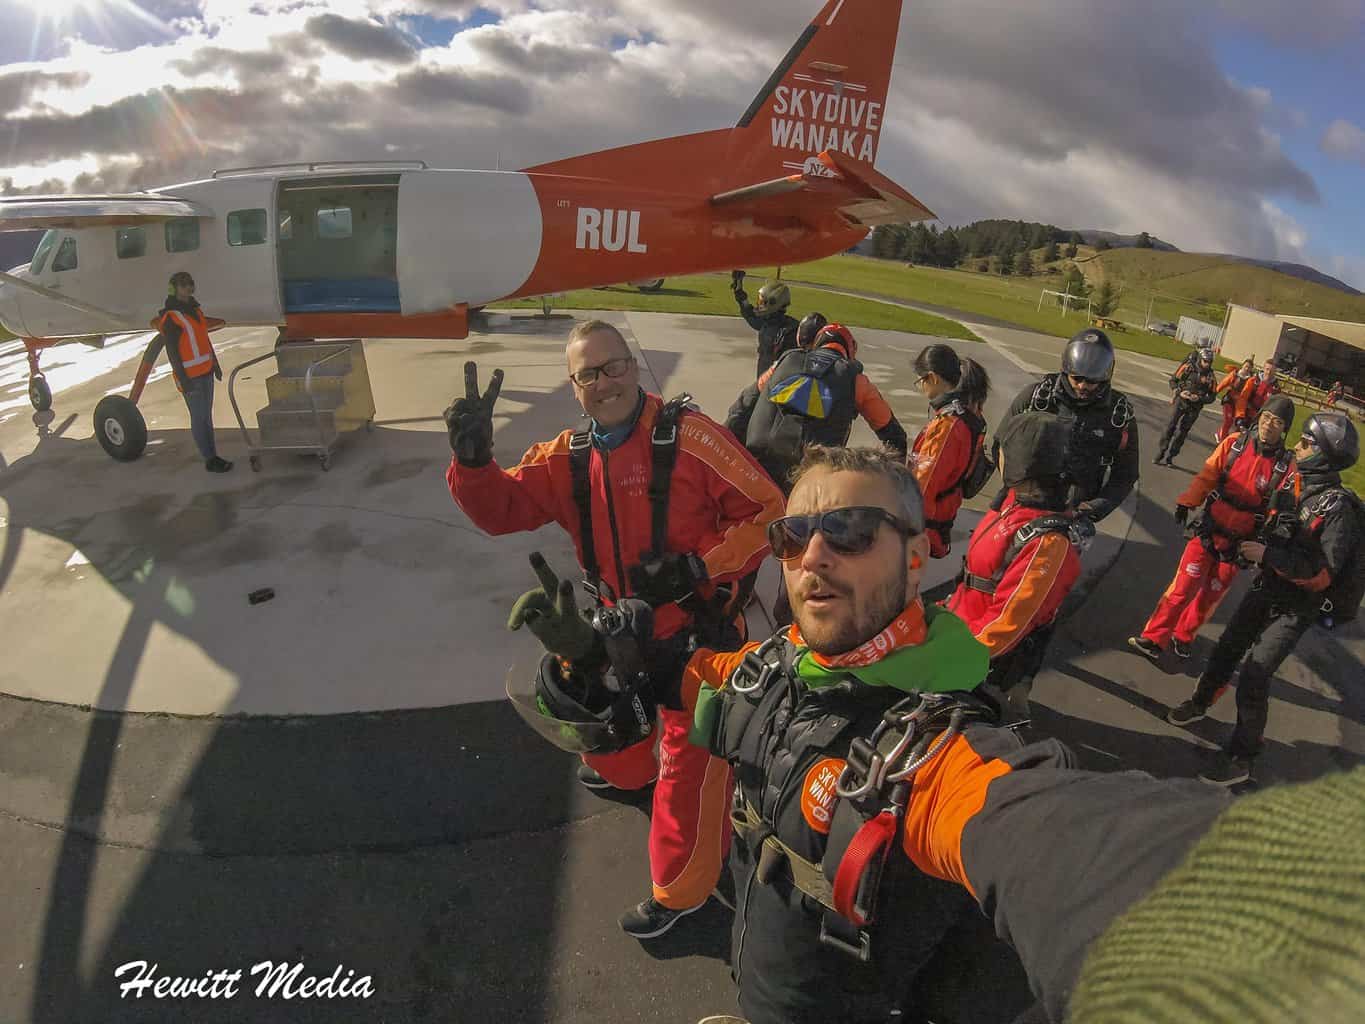 Wanaka New Zealand Guide - New Zealand Sky Diving